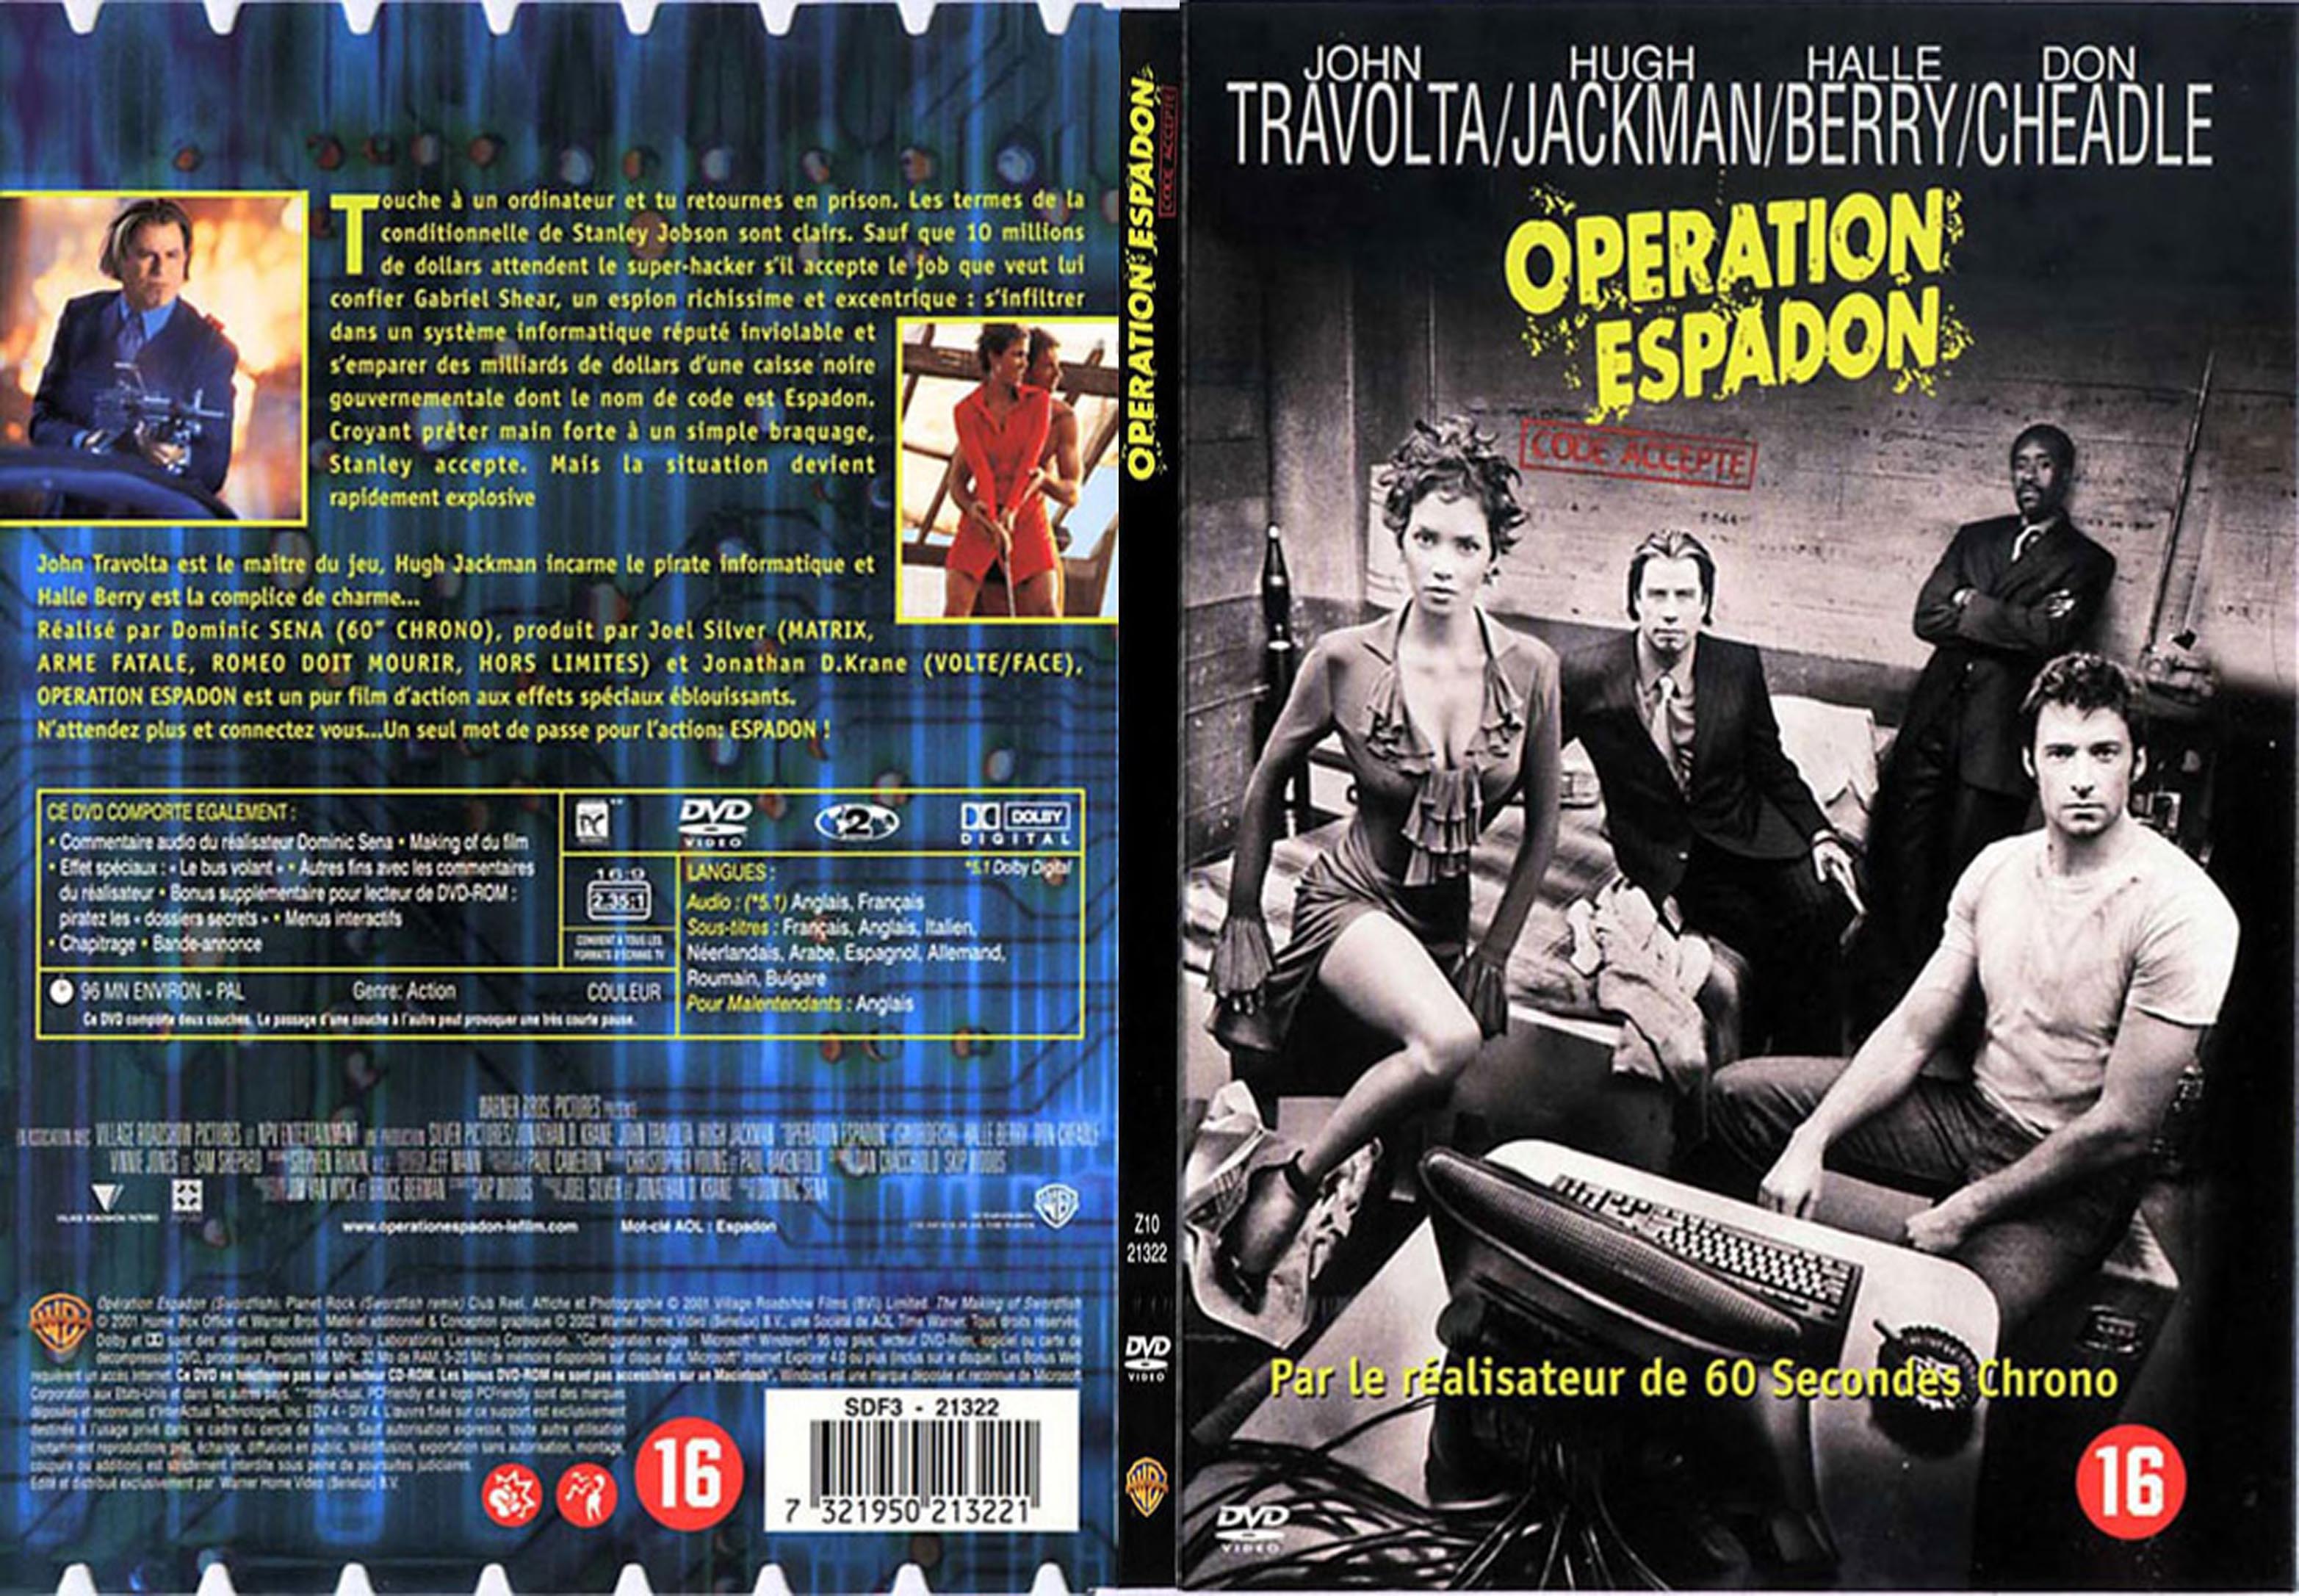 Jaquette DVD Operation espadon - SLIM